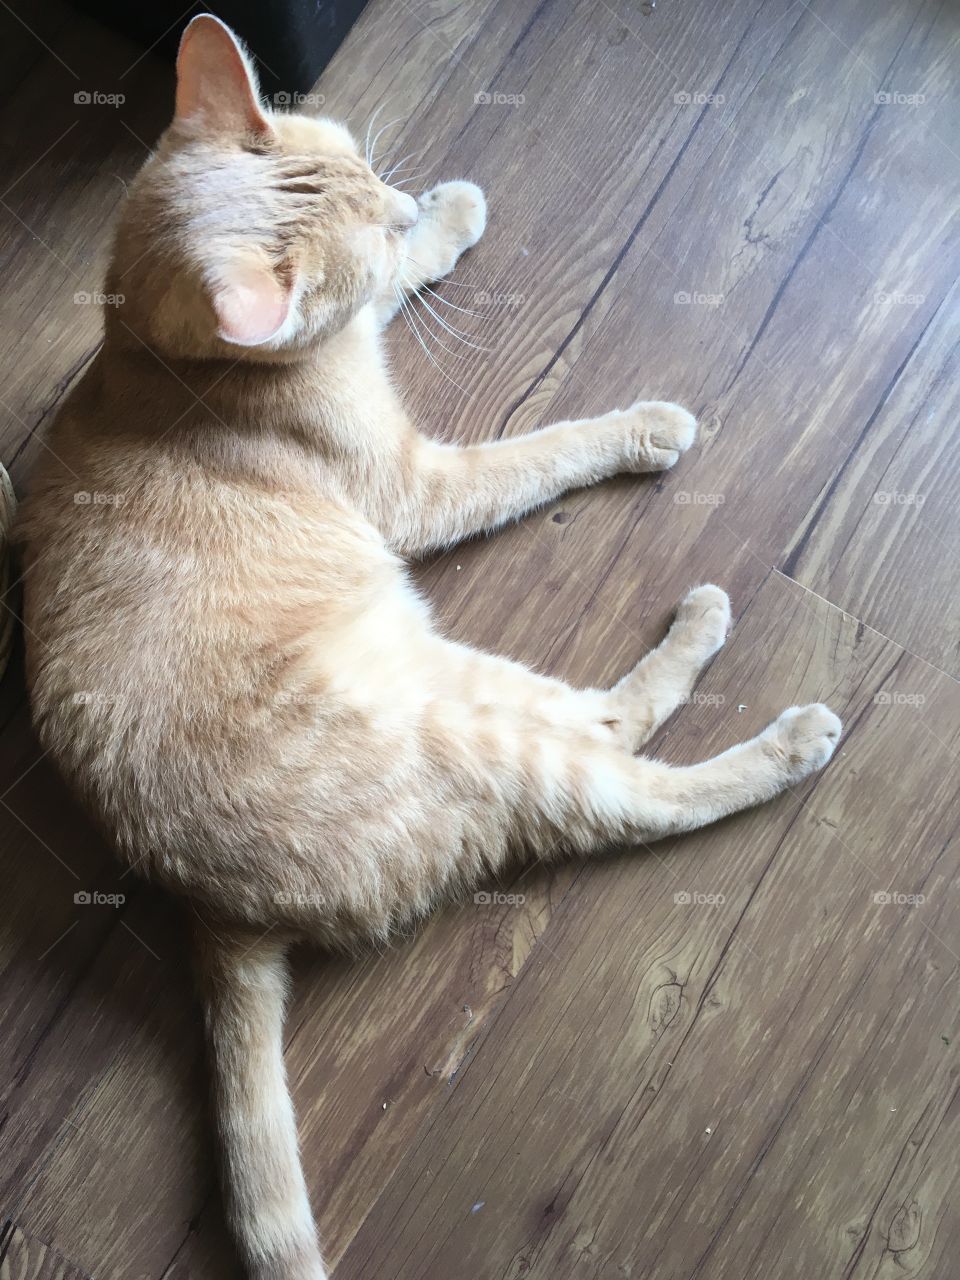 Cat lying on wood floor